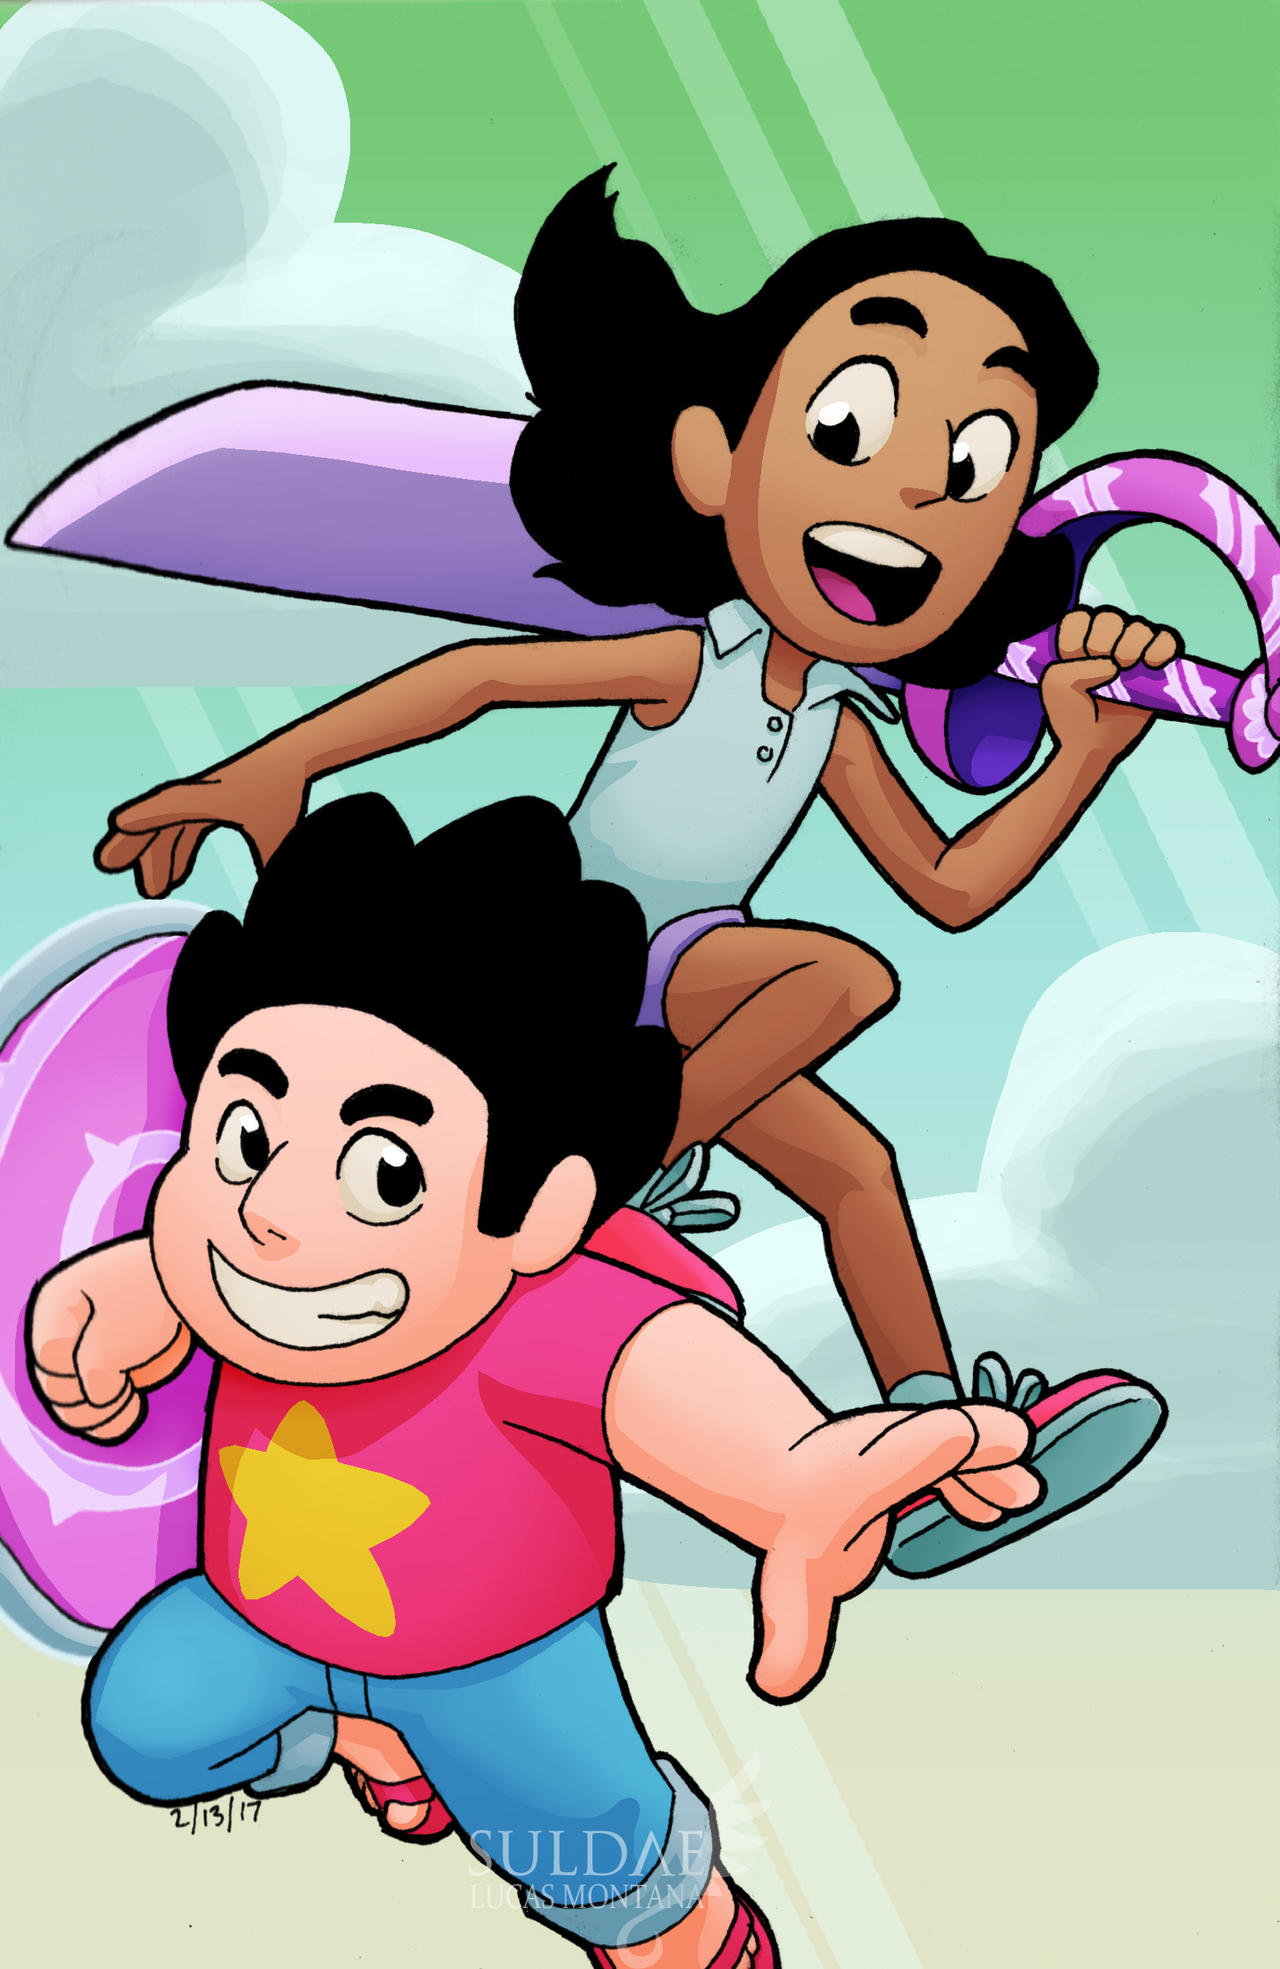 Steven and Connie Dive into Adventure!